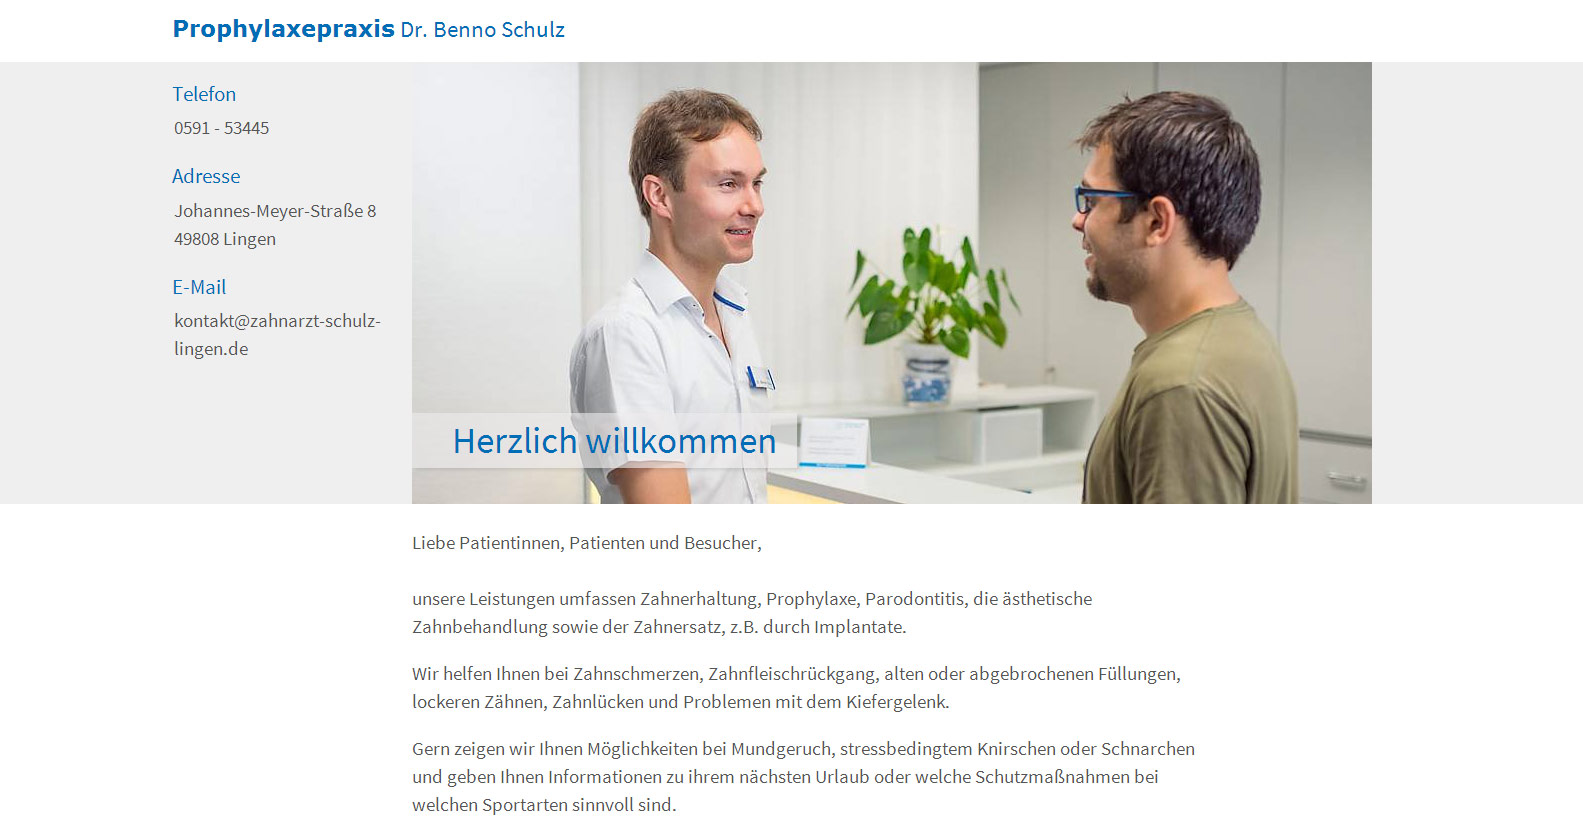 Zahnarzt Dr. Benno Schulz | Ihre Prophylaxepraxis in Lingen